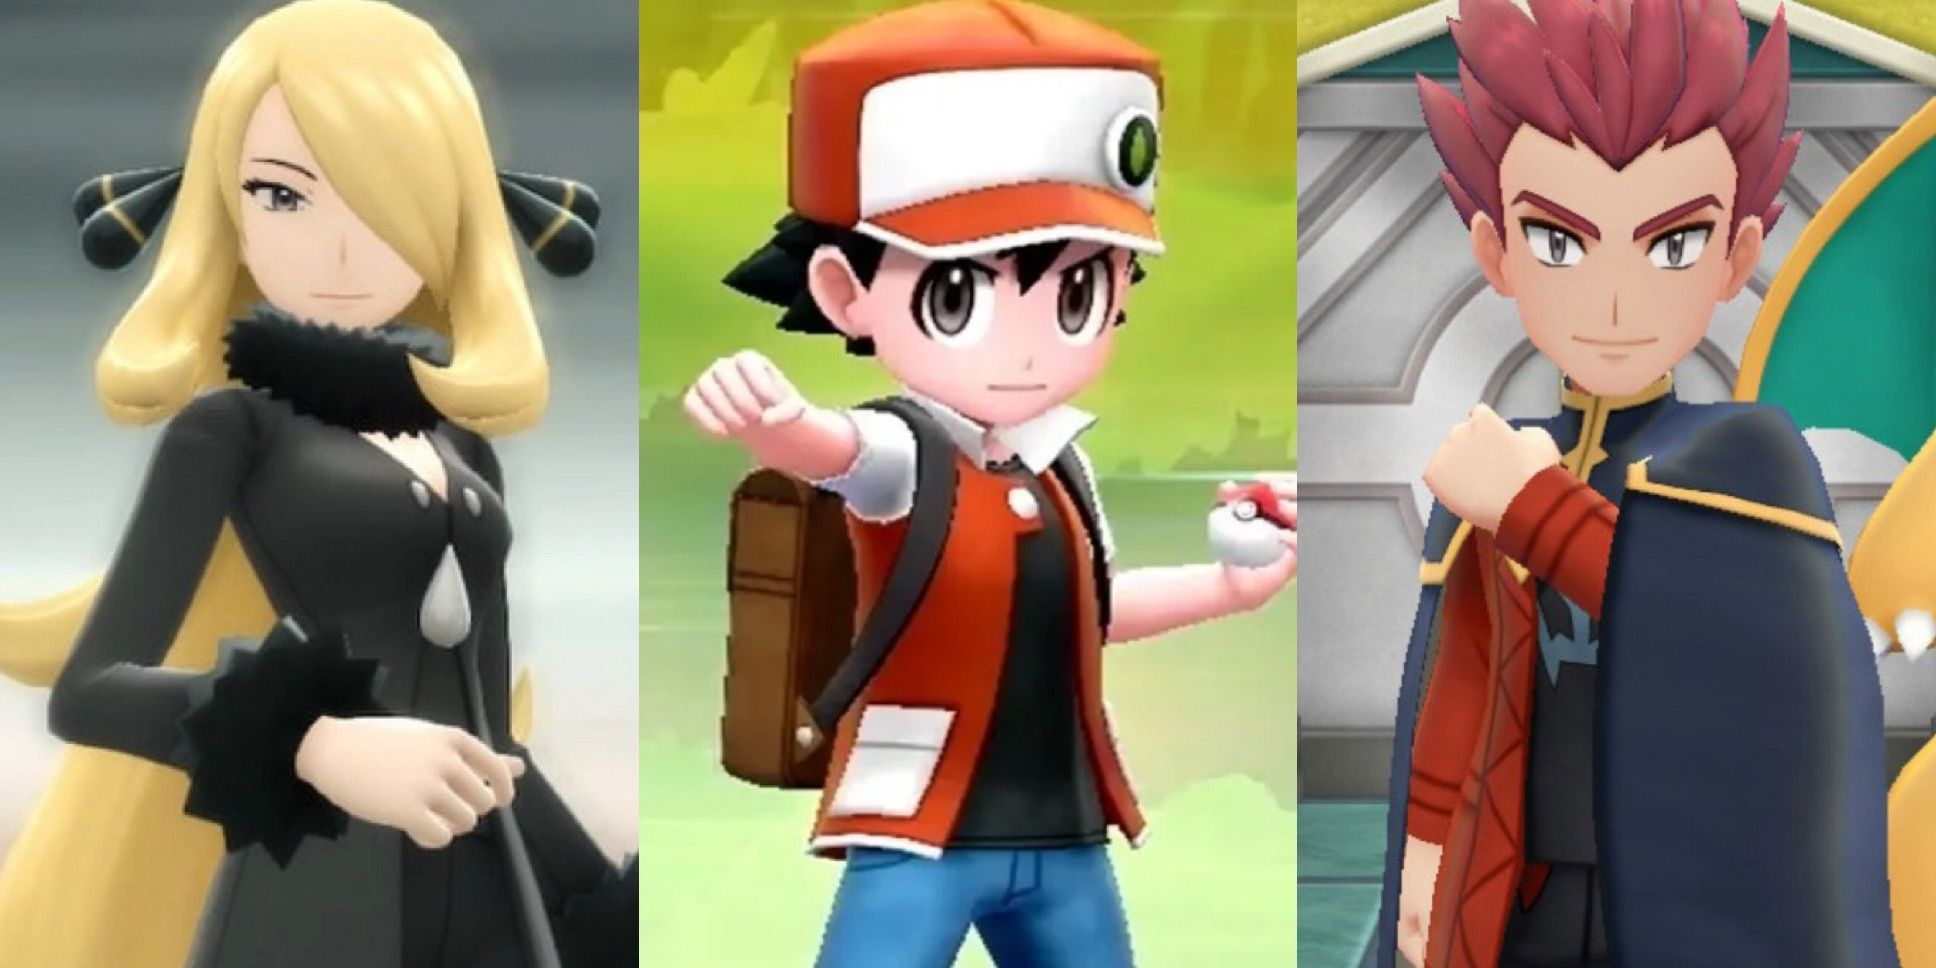 Cynthia, Red and Lance - Pokemon Champions ready to battle